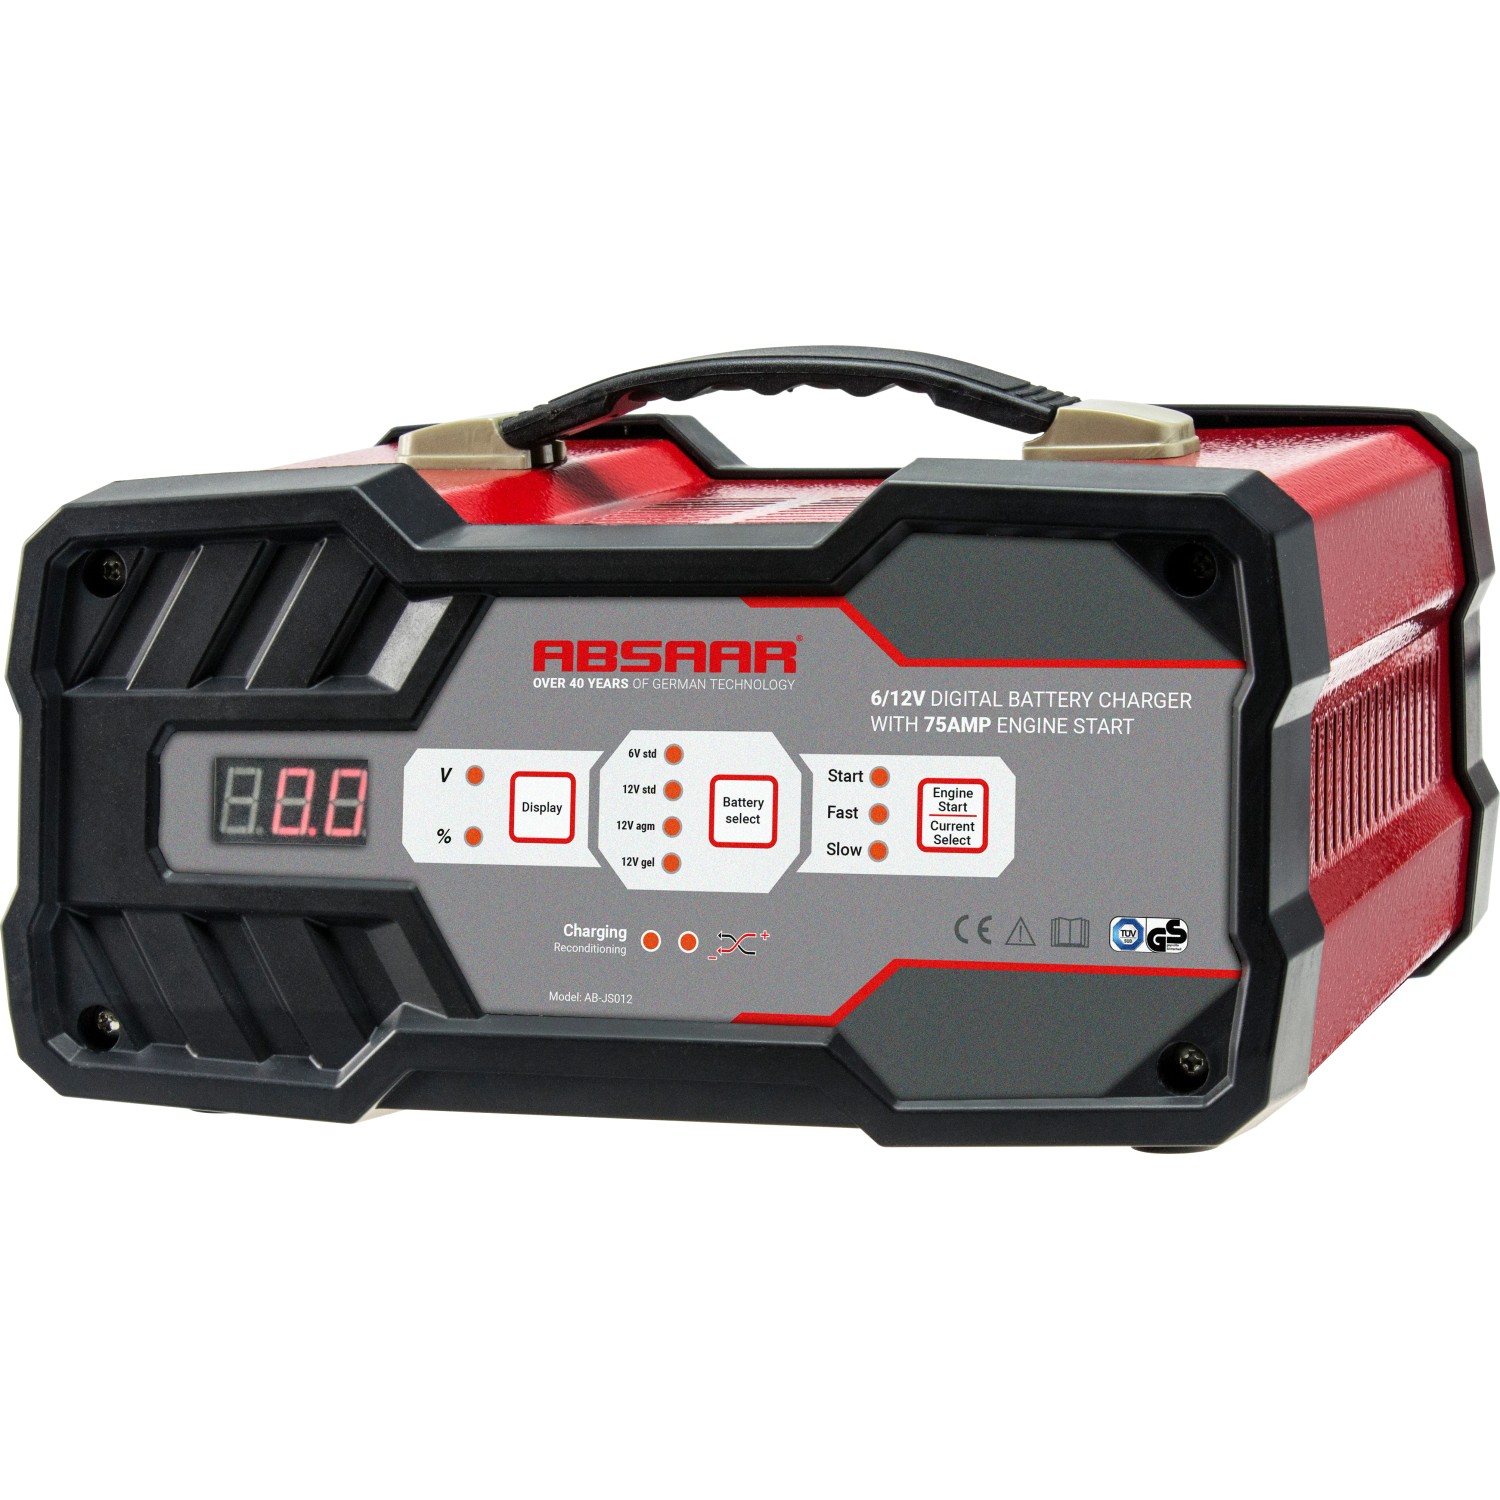 APA 16623 Batterie-Ladegerät Werkstatt Digital, mit Starthilfe